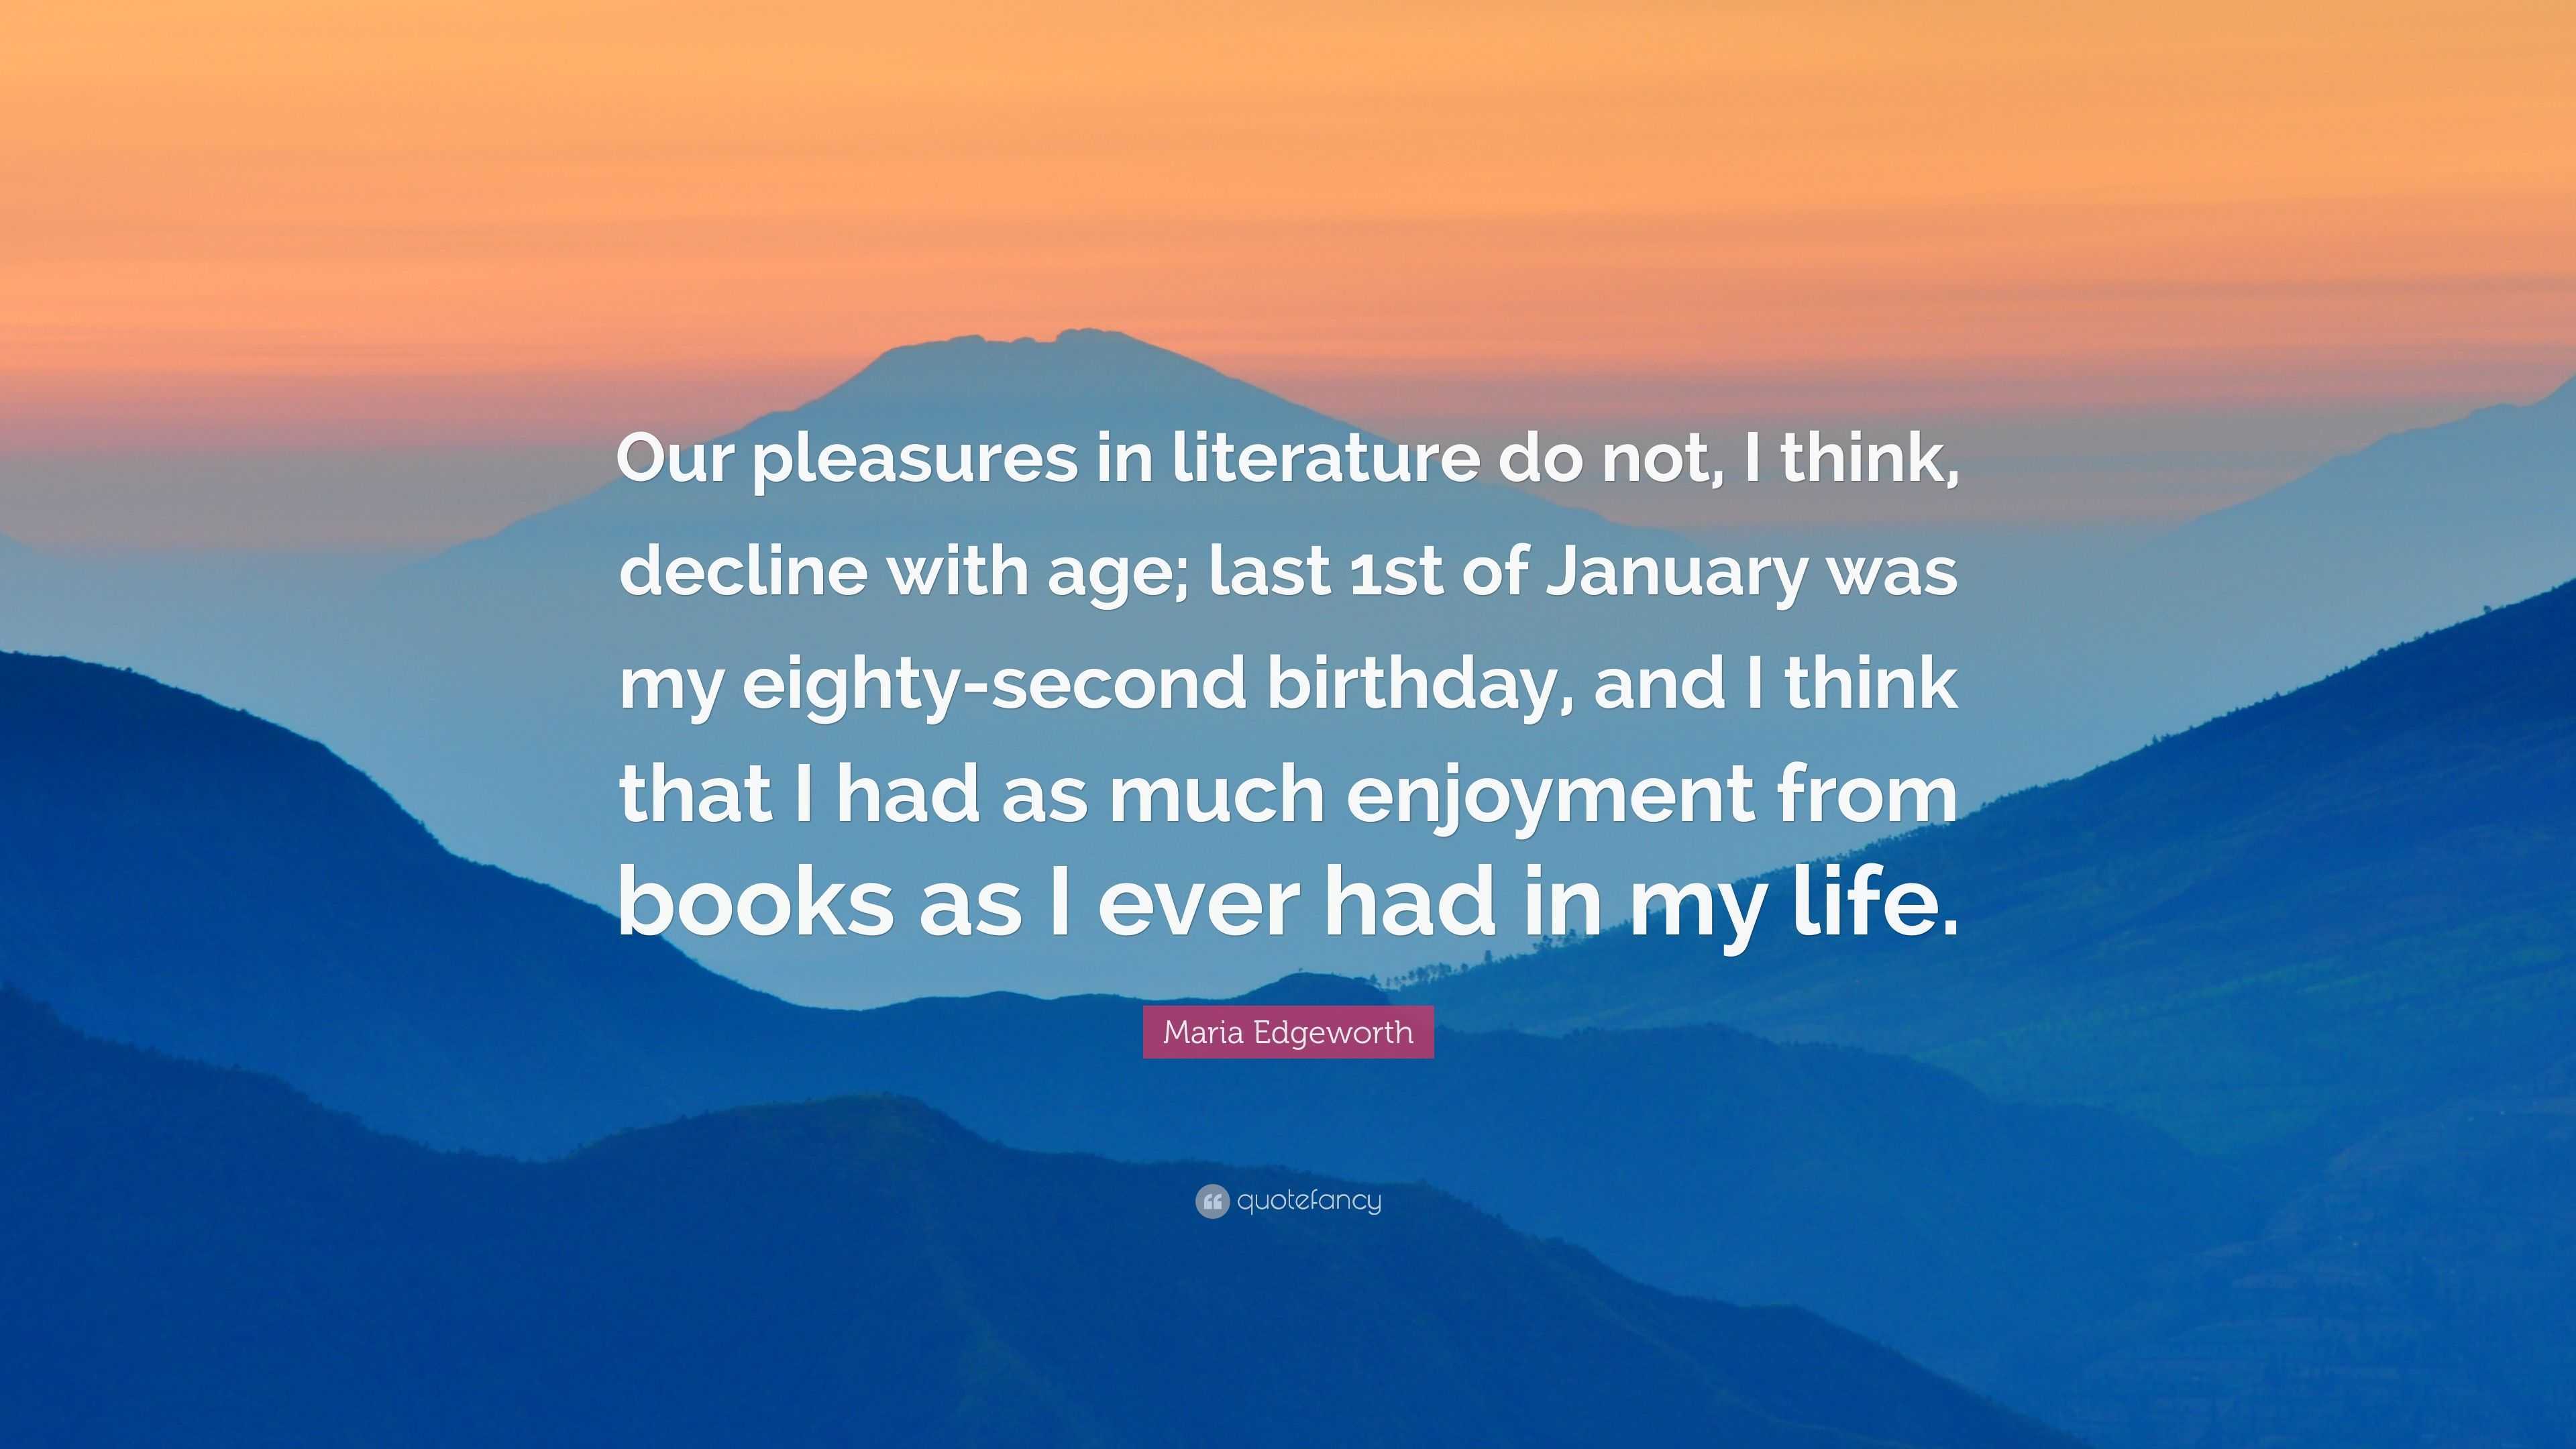 Maria Edgeworth Quote: “Our pleasures in literature do not, I think ...